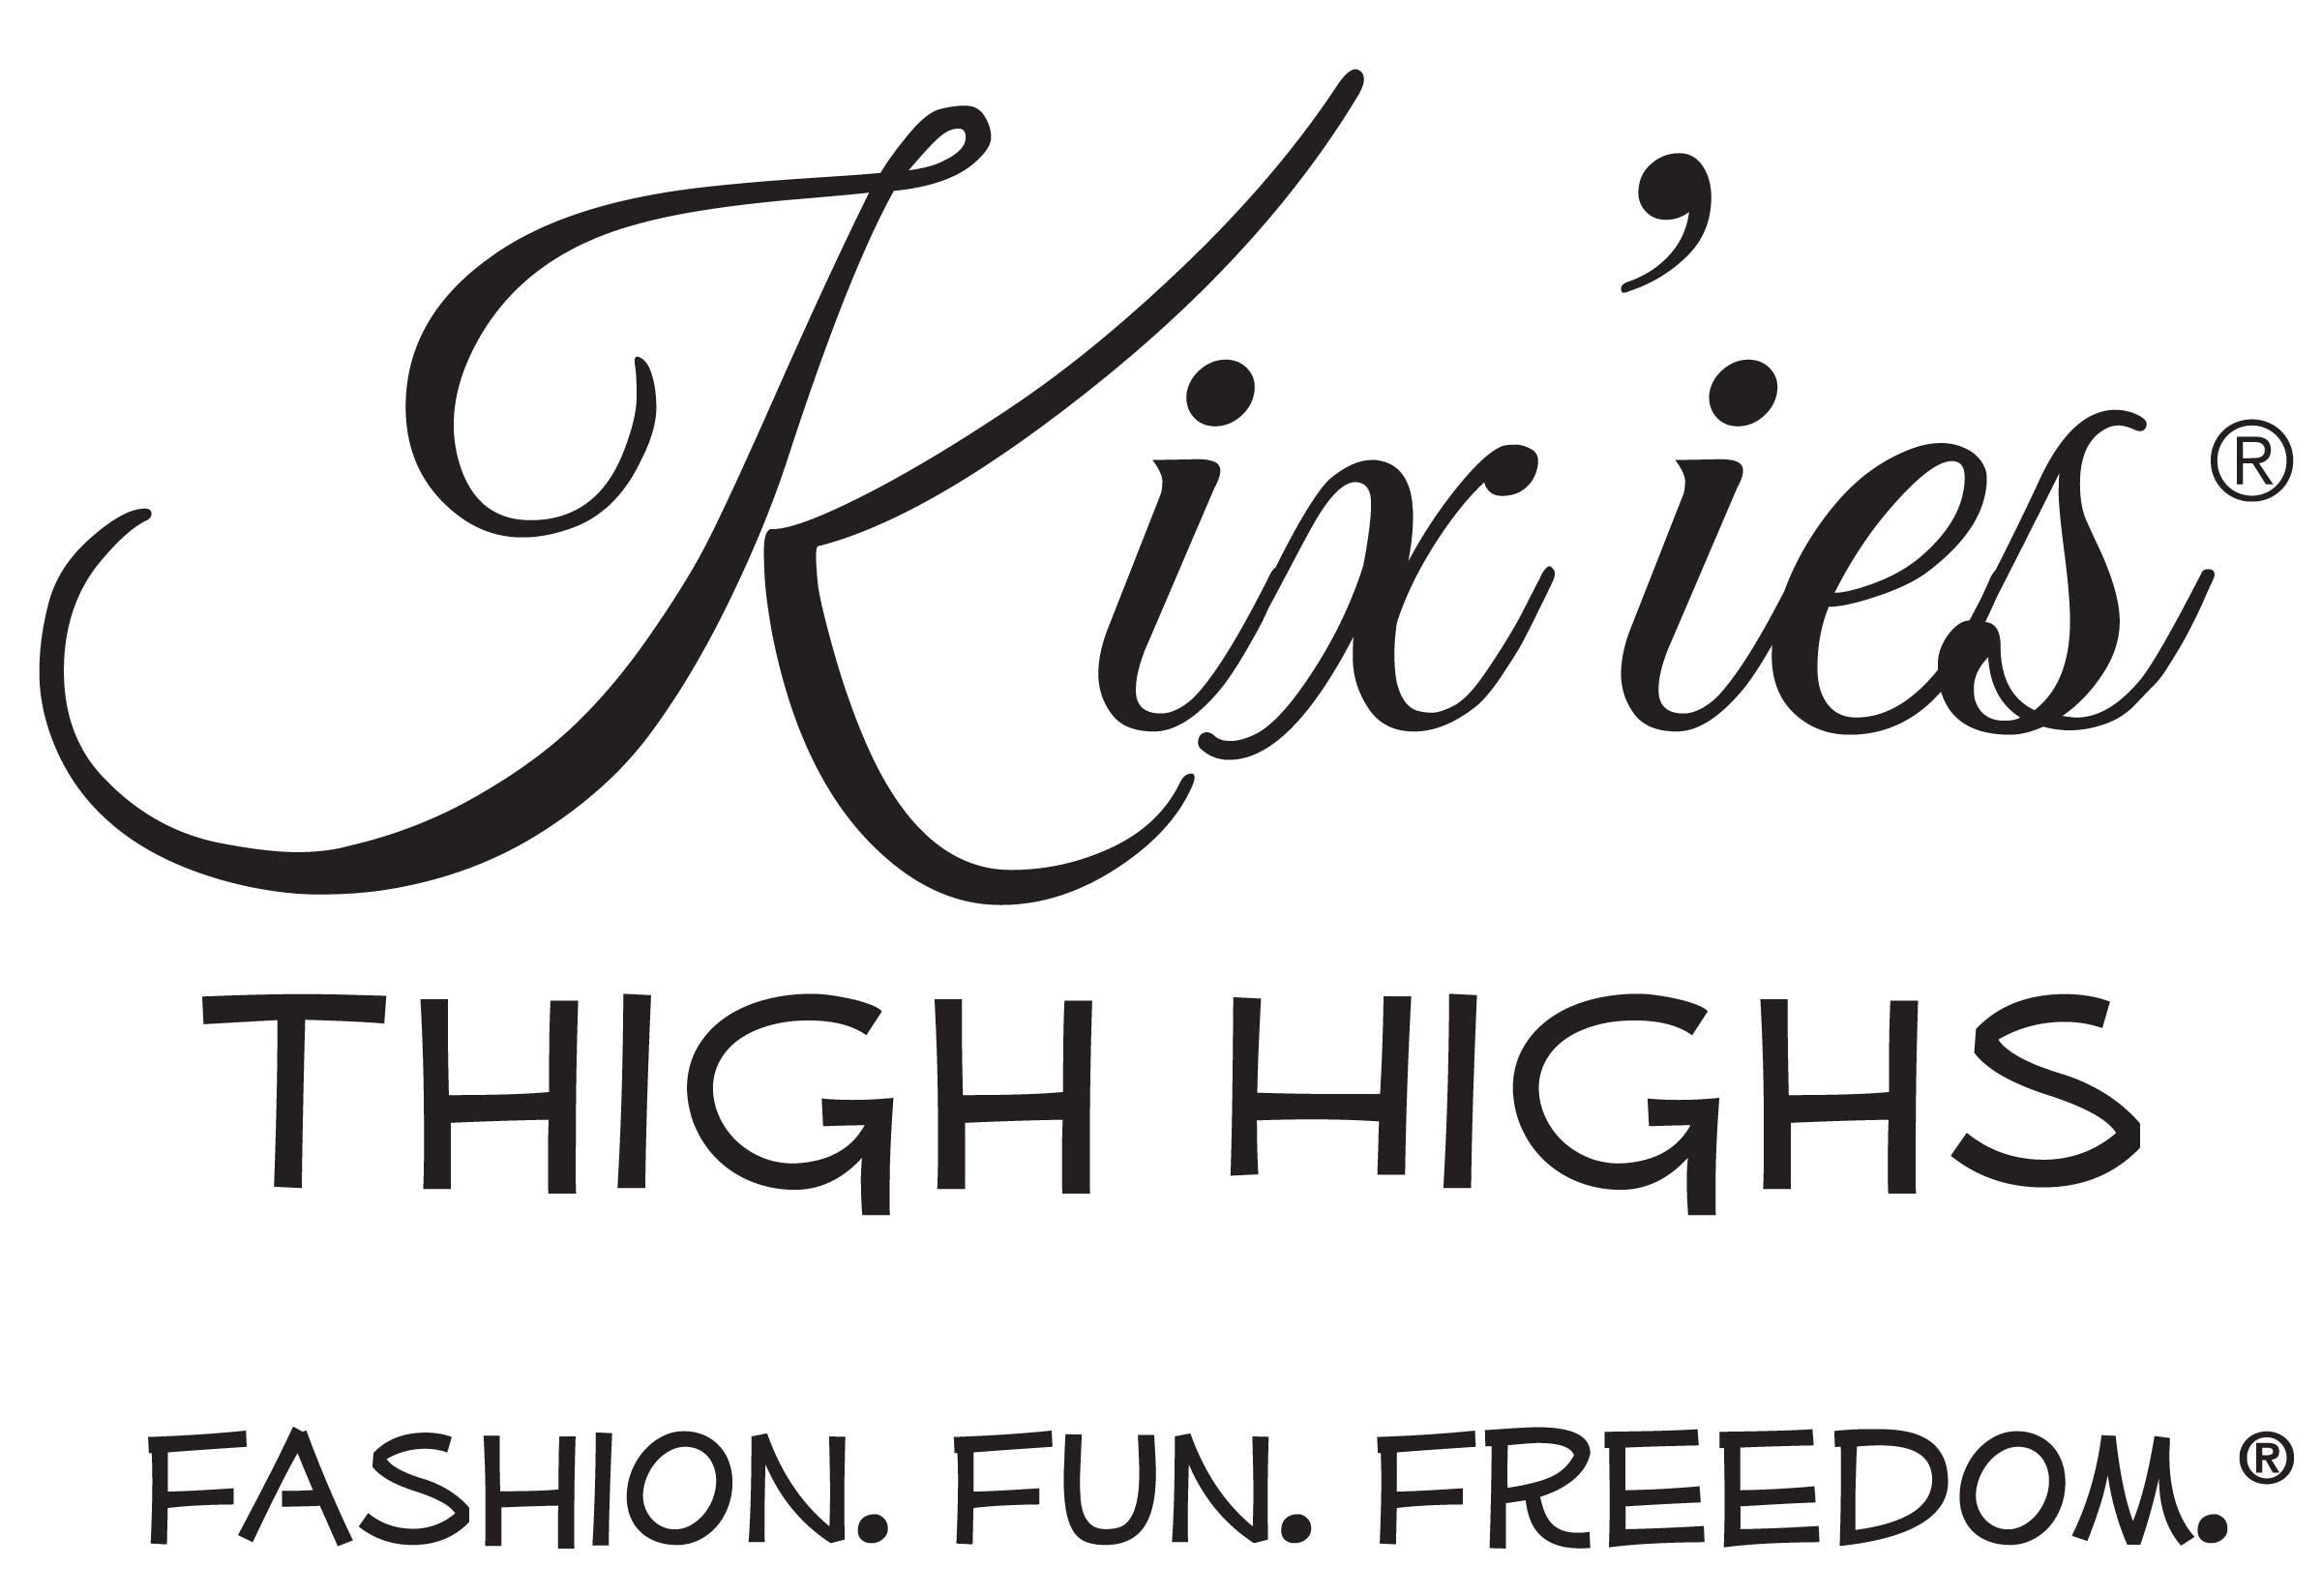 Kixies offers